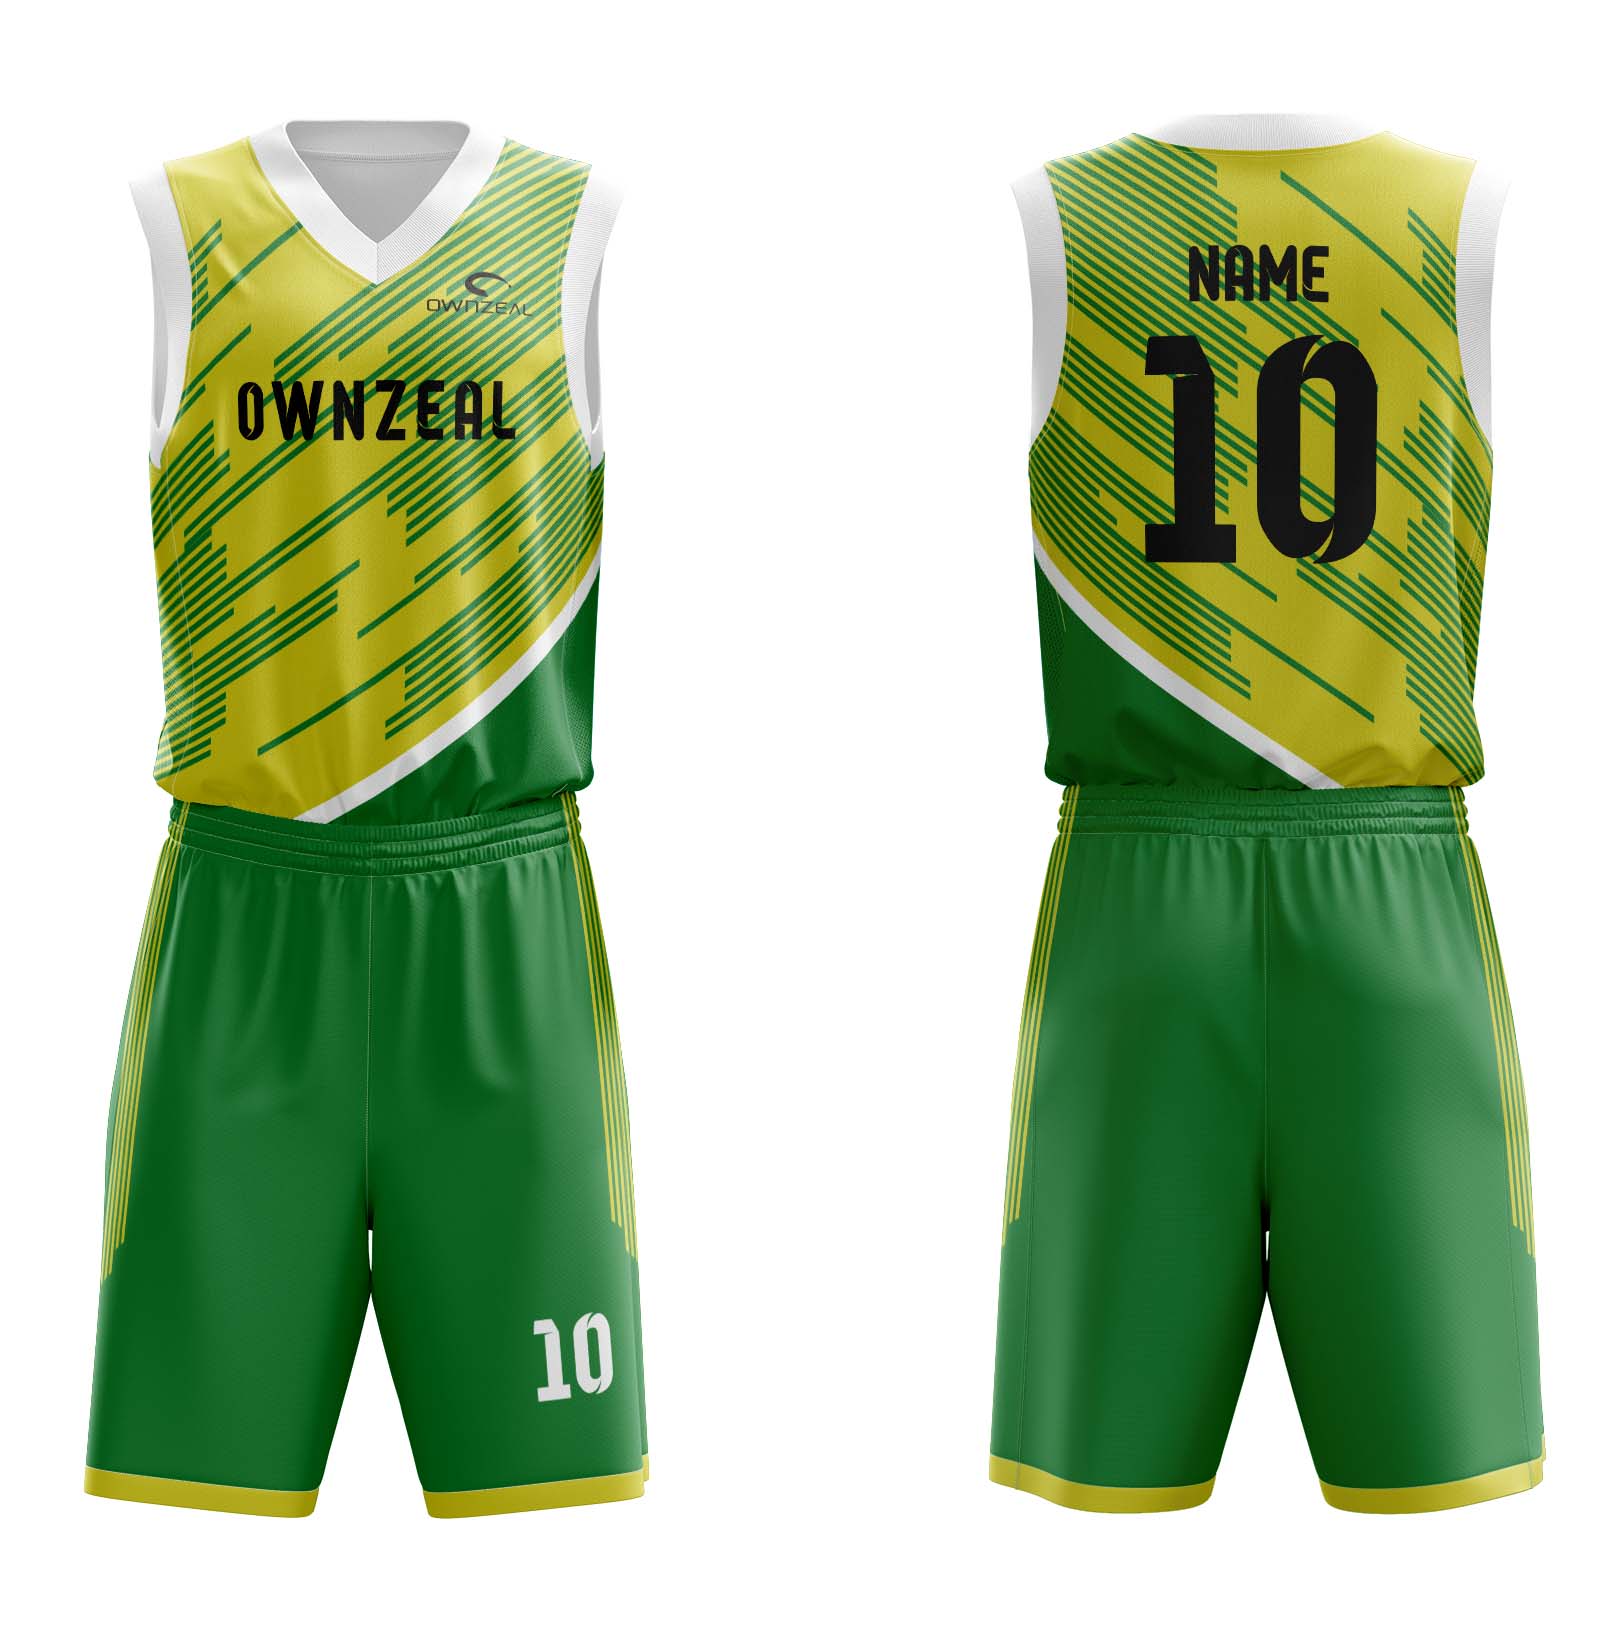 Custom Sublimated Basketball Uniforms - BU141